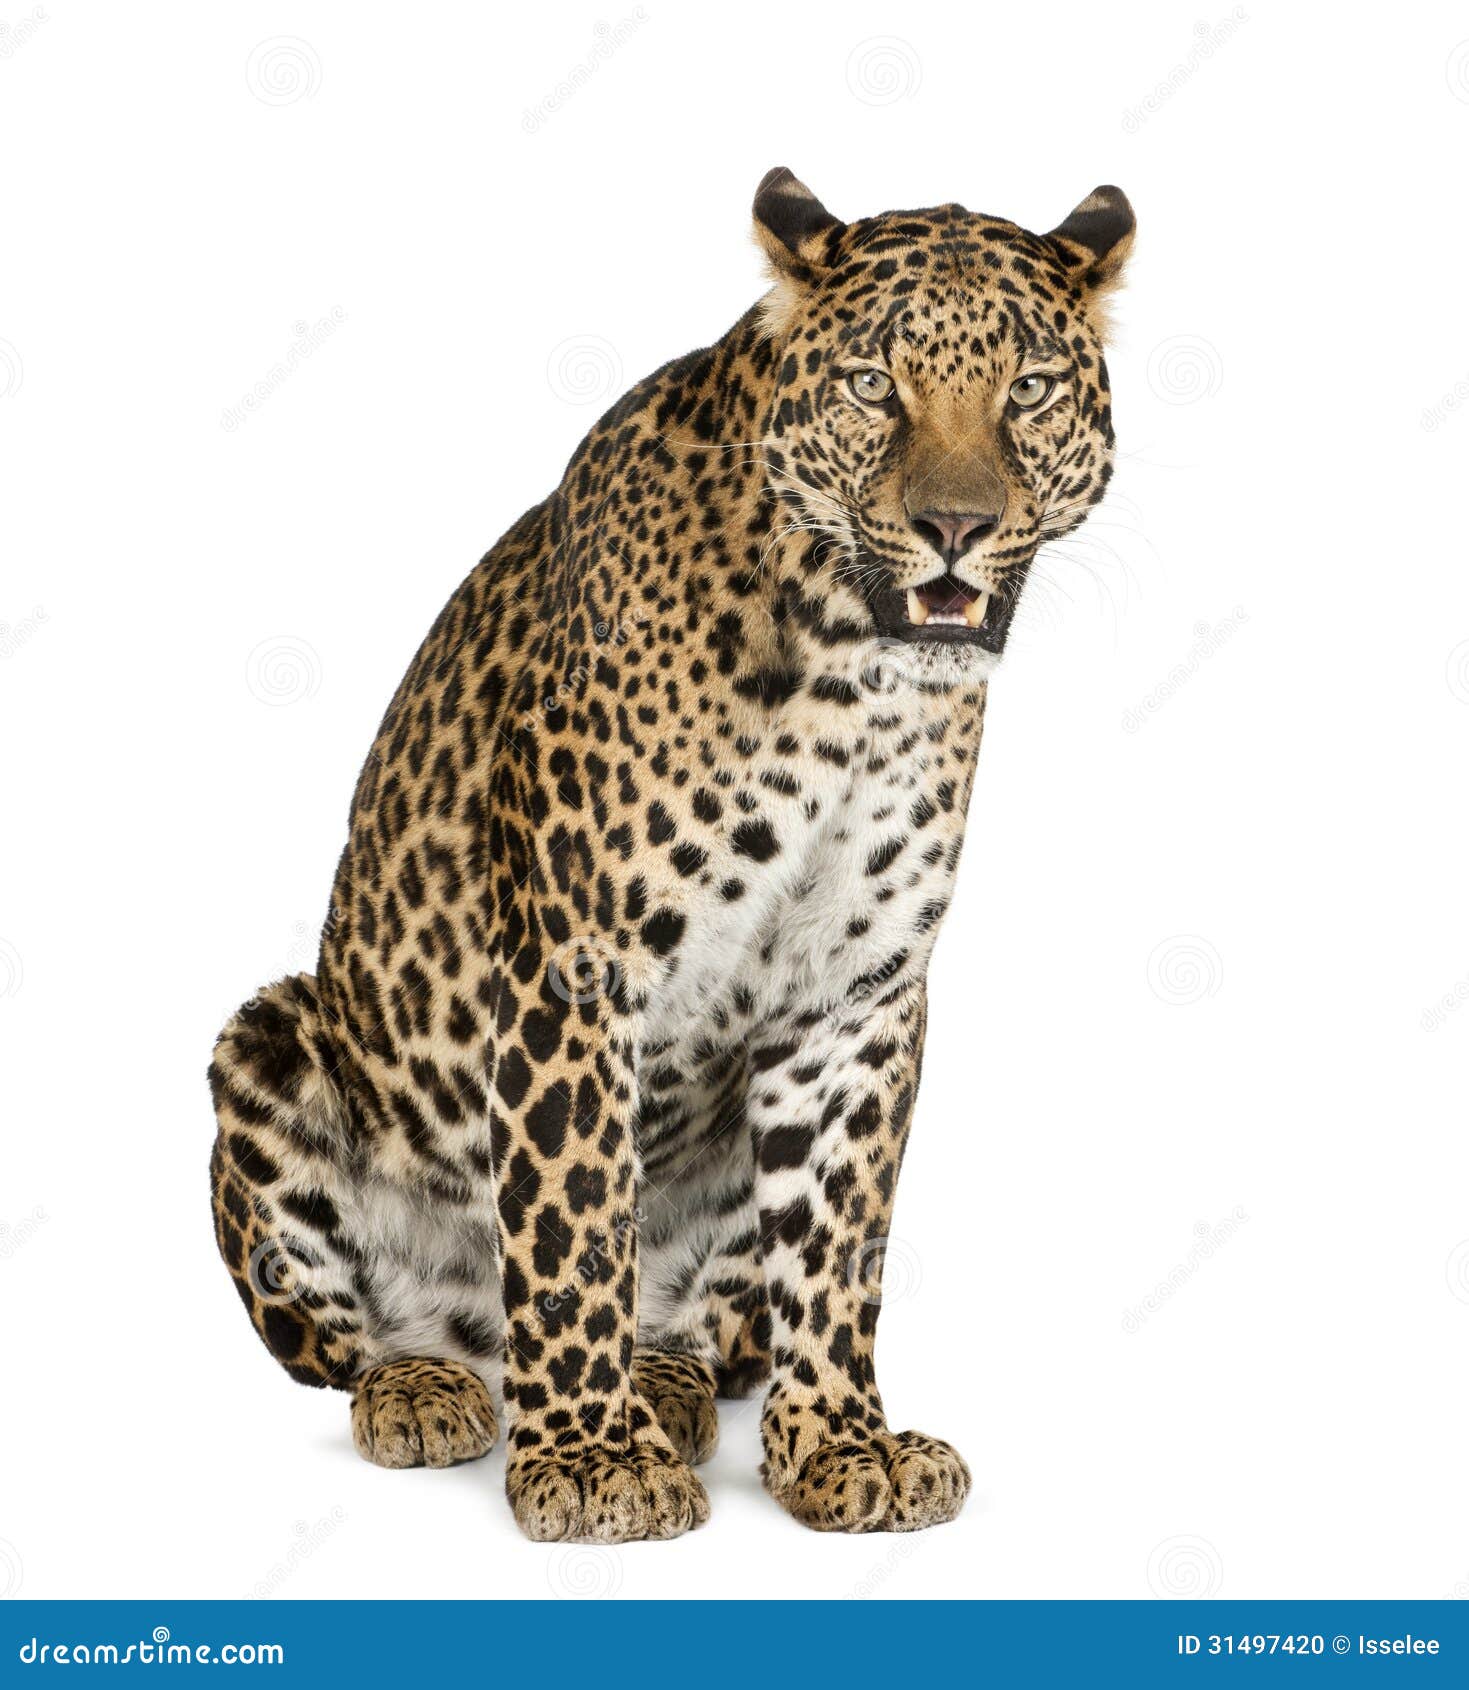 leopard sitting, roaring, panthera pardus